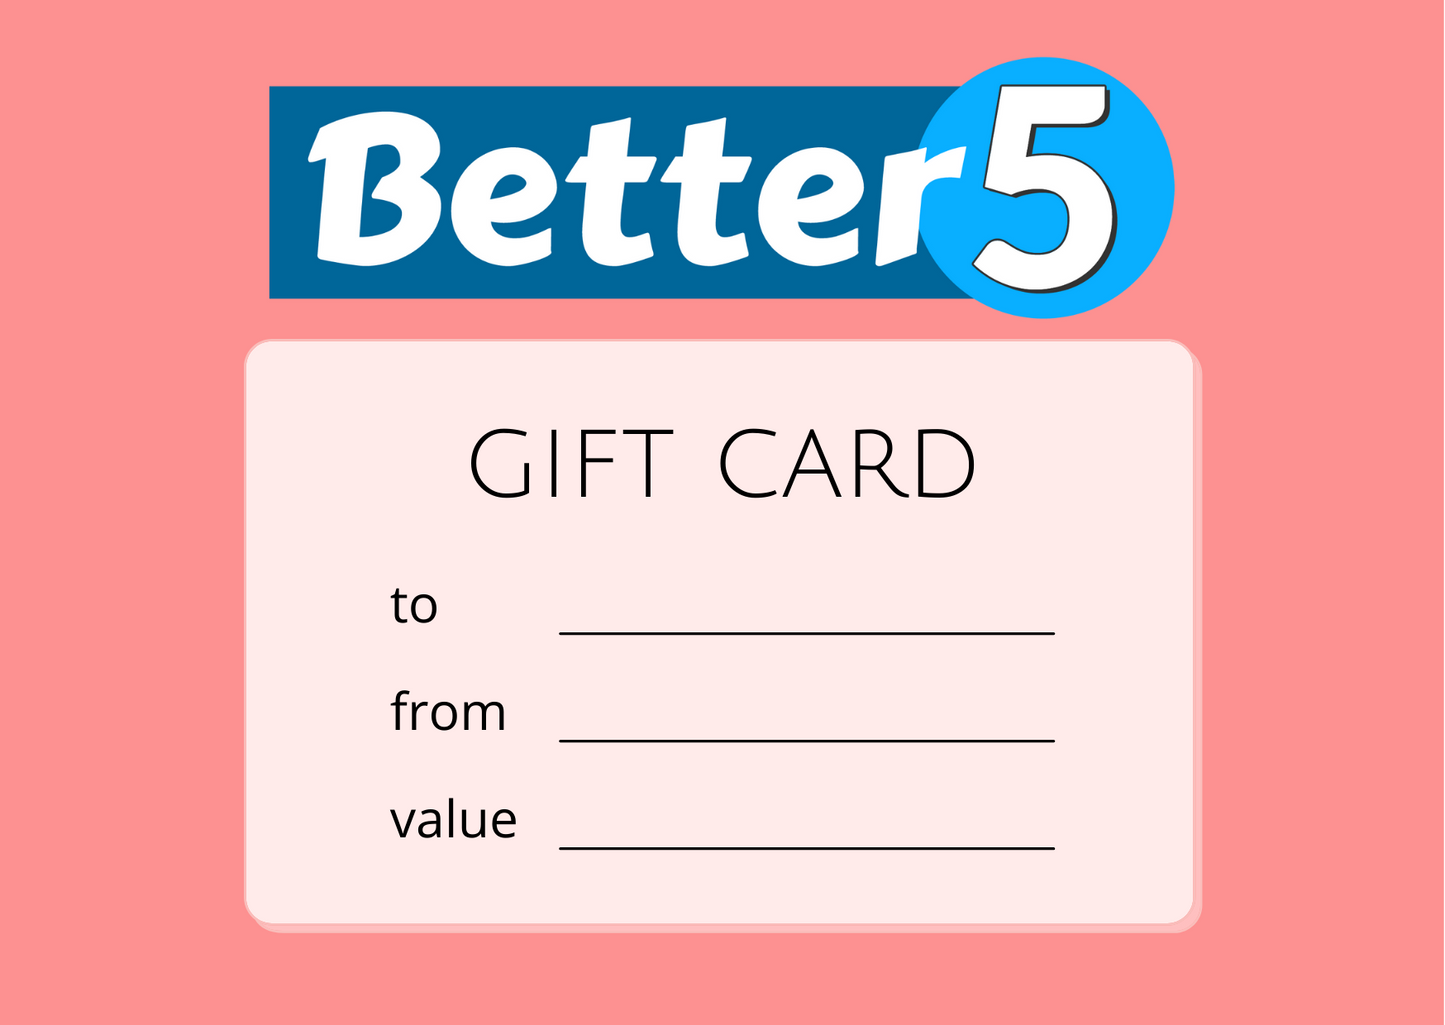 Better5 Gift Card